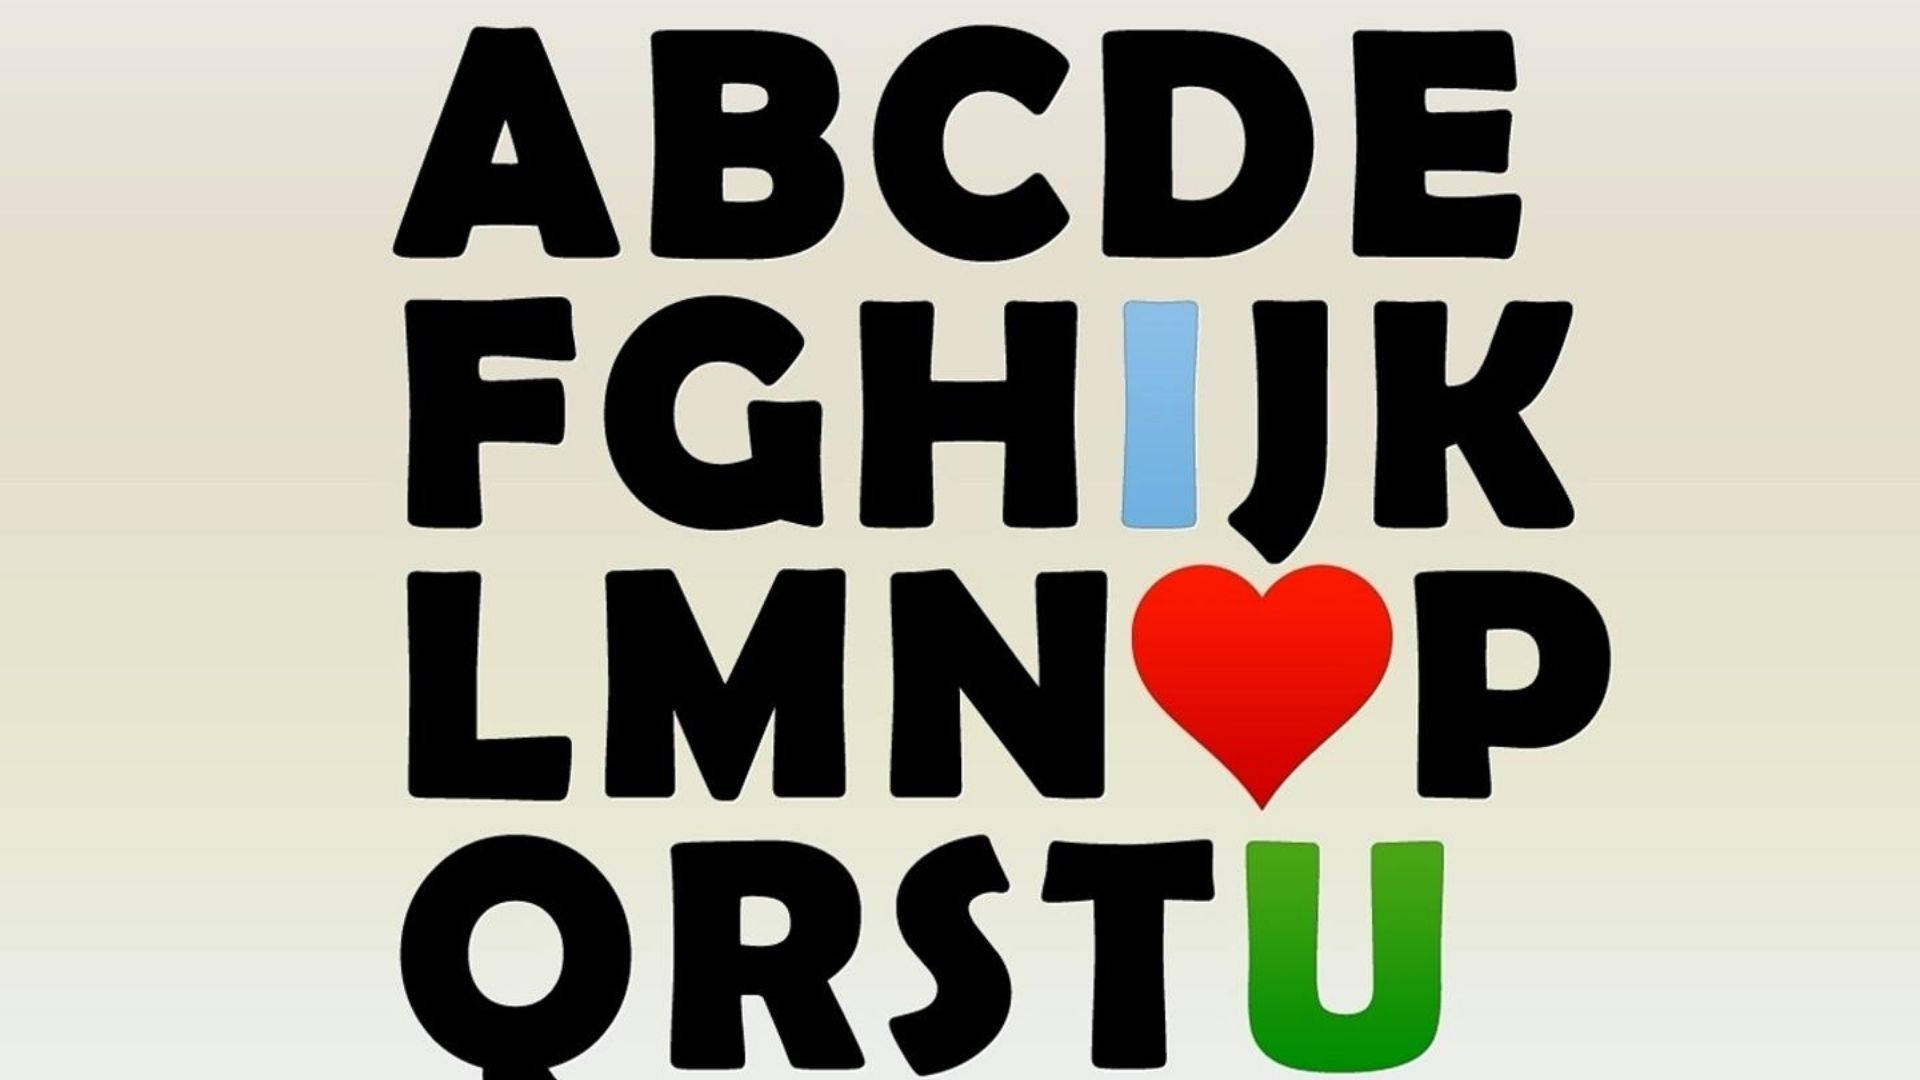 I Love You Alphabets Background